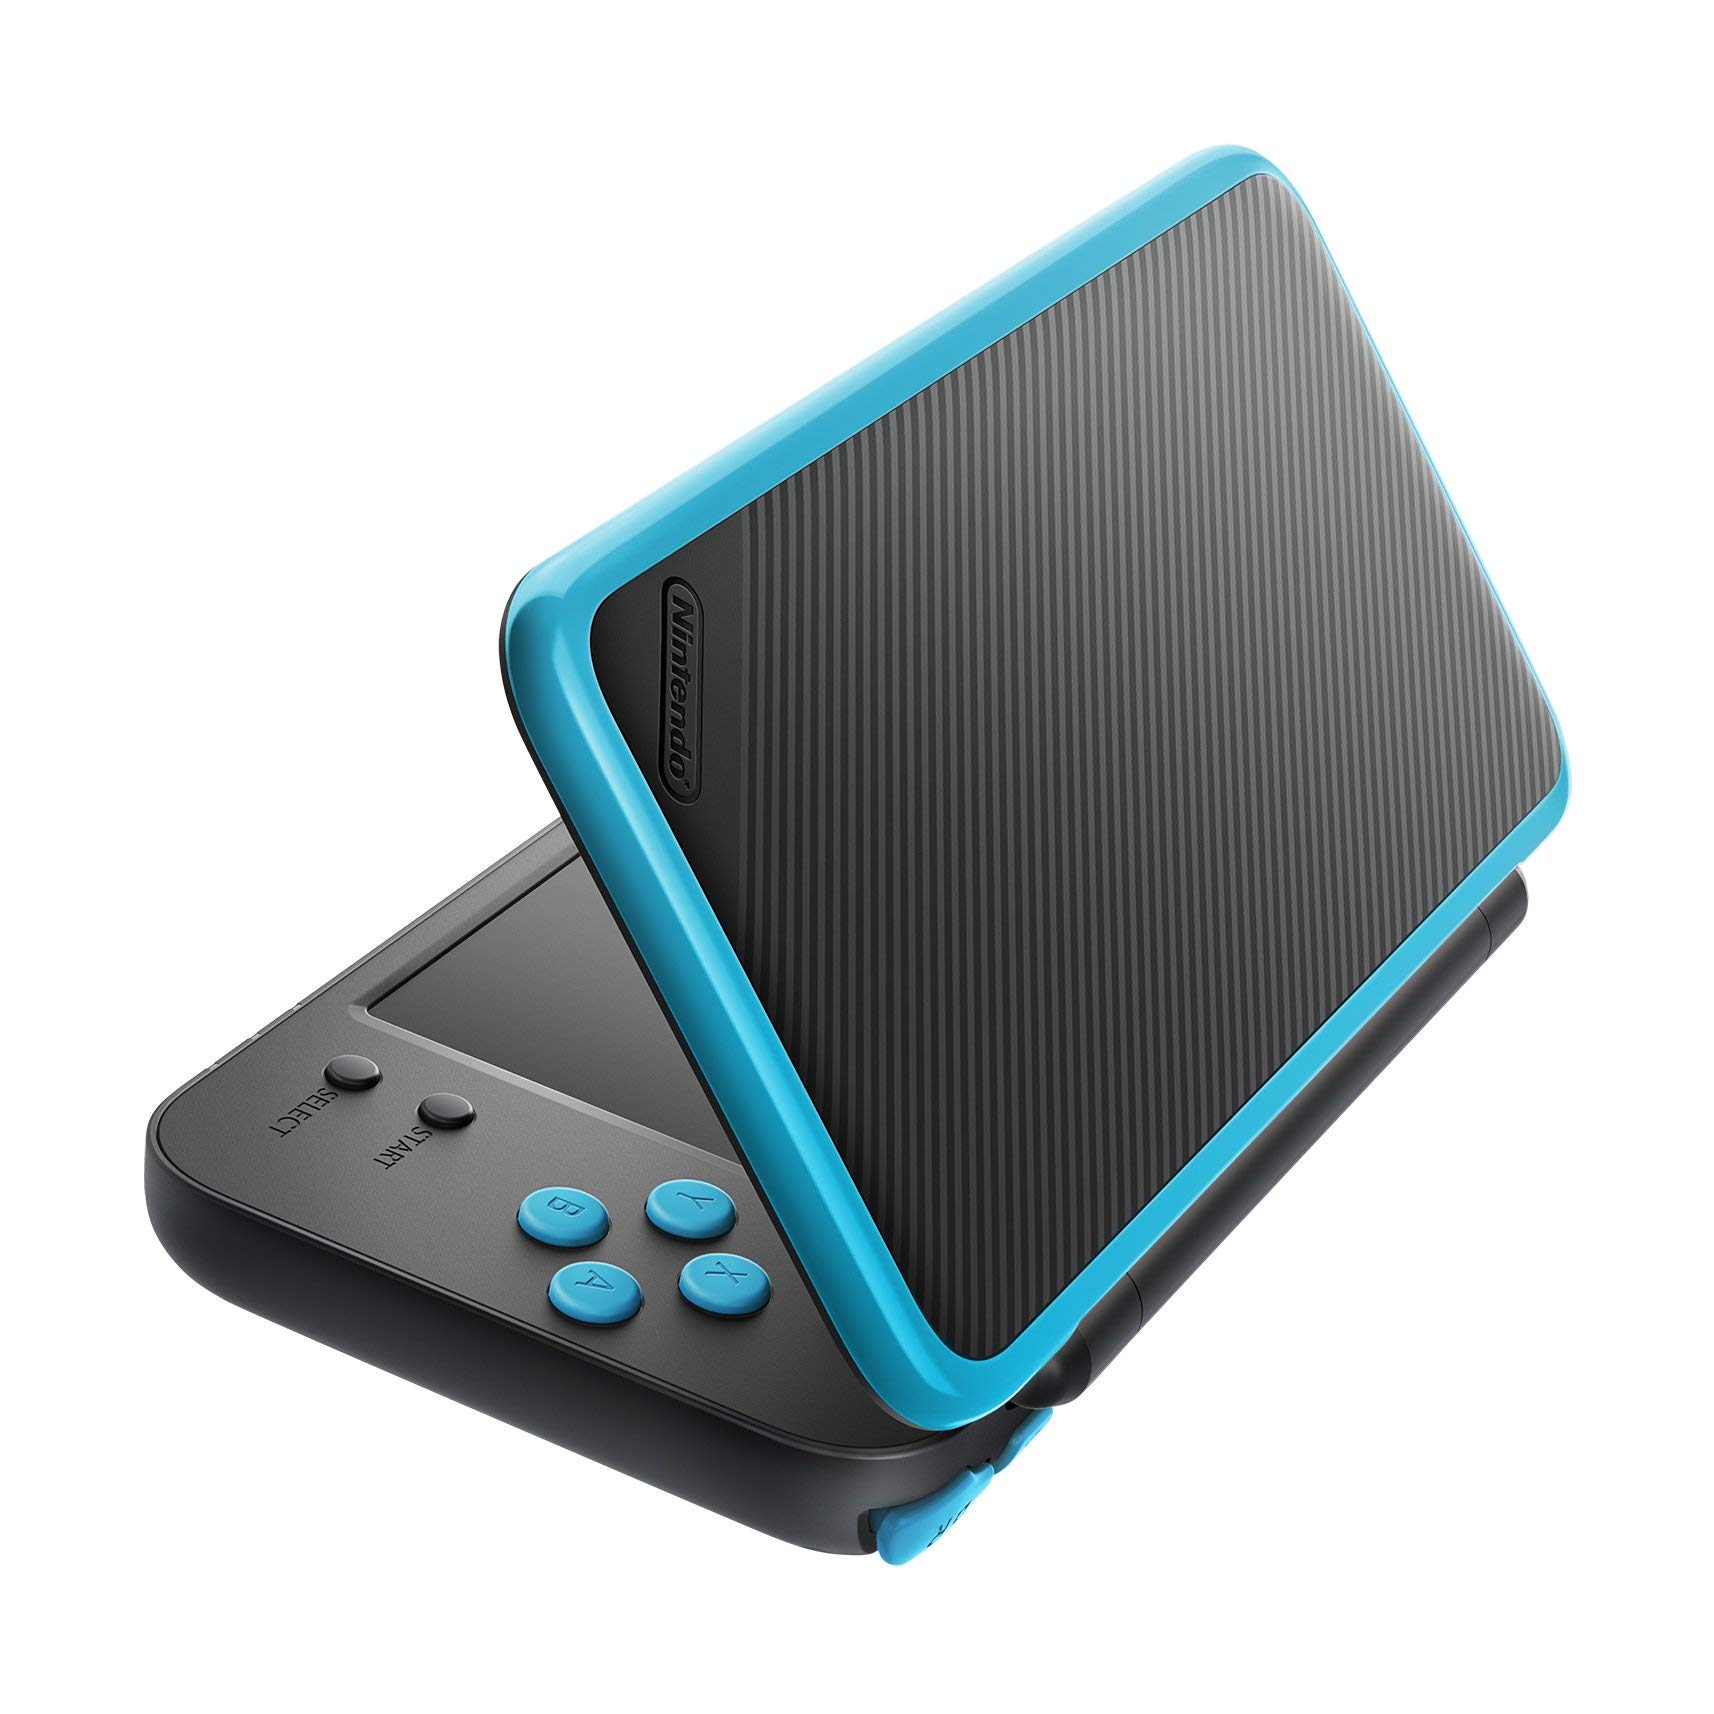 Nintendo New 2DS XL - Black + Turquoise (Renewed)